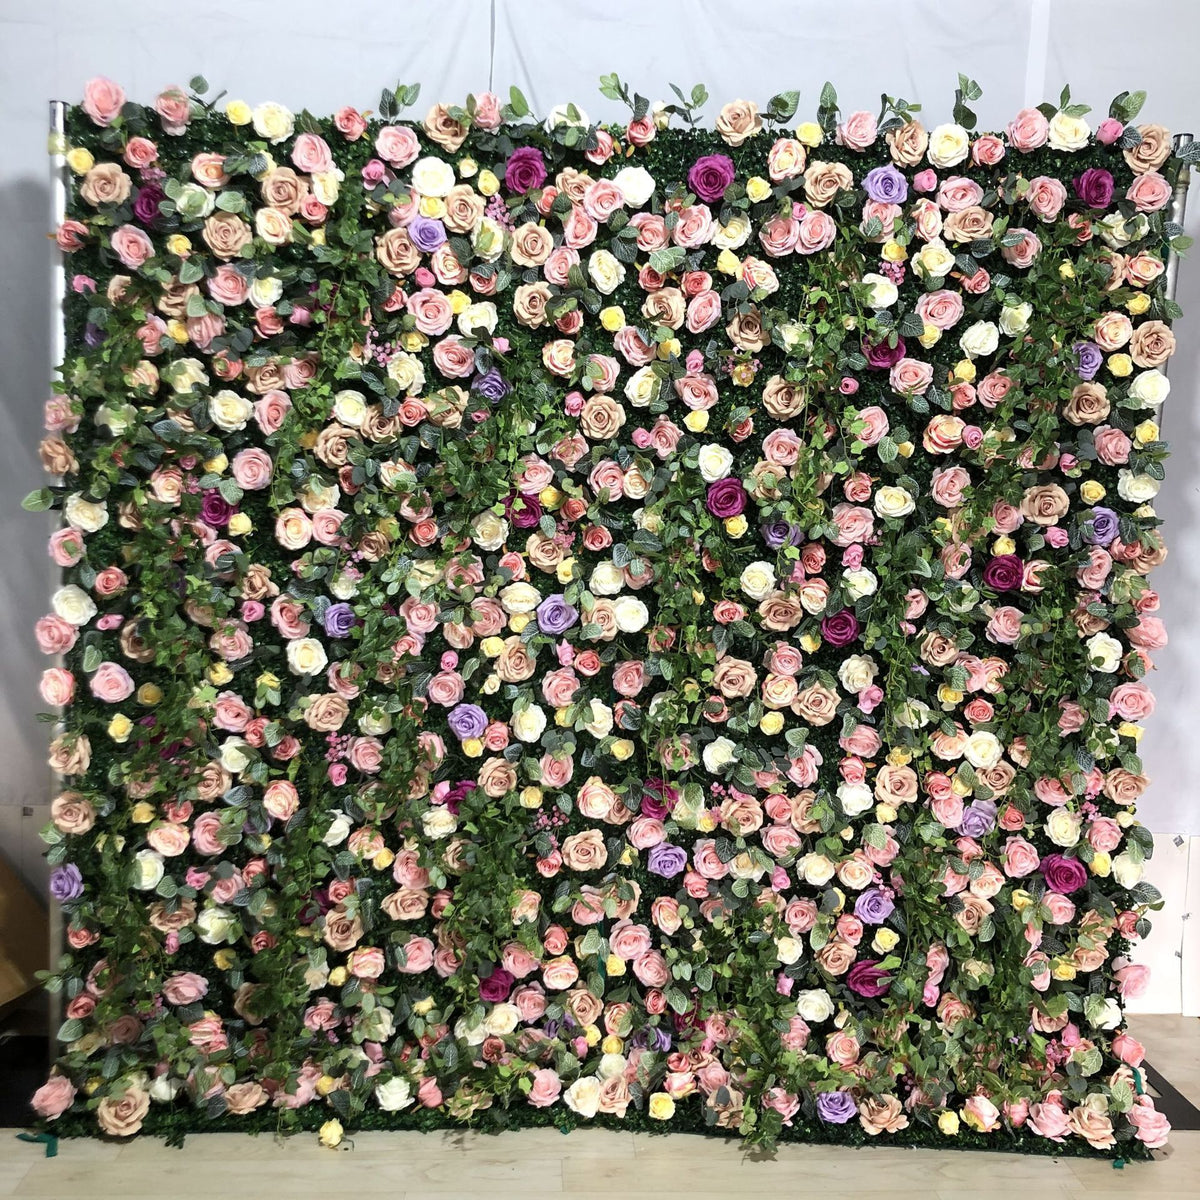 3D Artificial Flower Wall Arrangement Wedding Party Birthday Backdrop Decor HQ3973